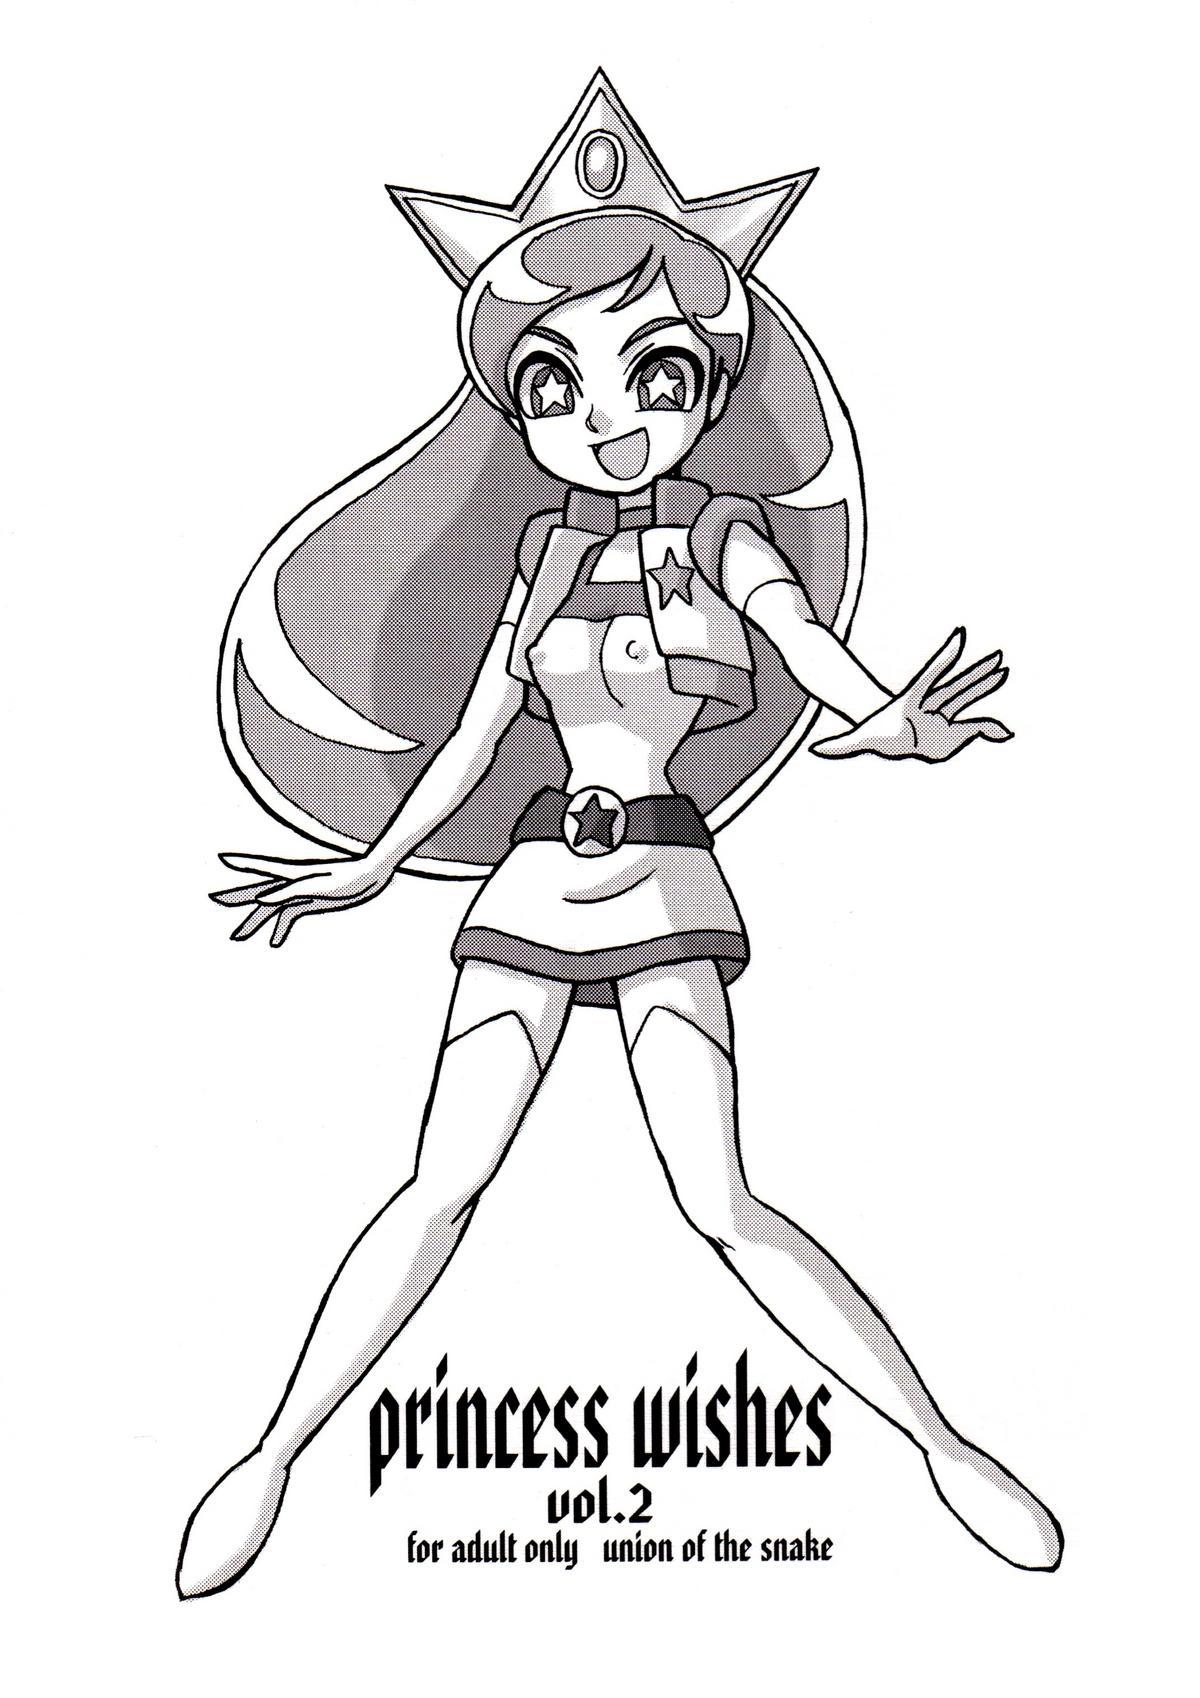 Bathroom princess wishes vol. 2 - Powerpuff girls z Tats - Picture 1